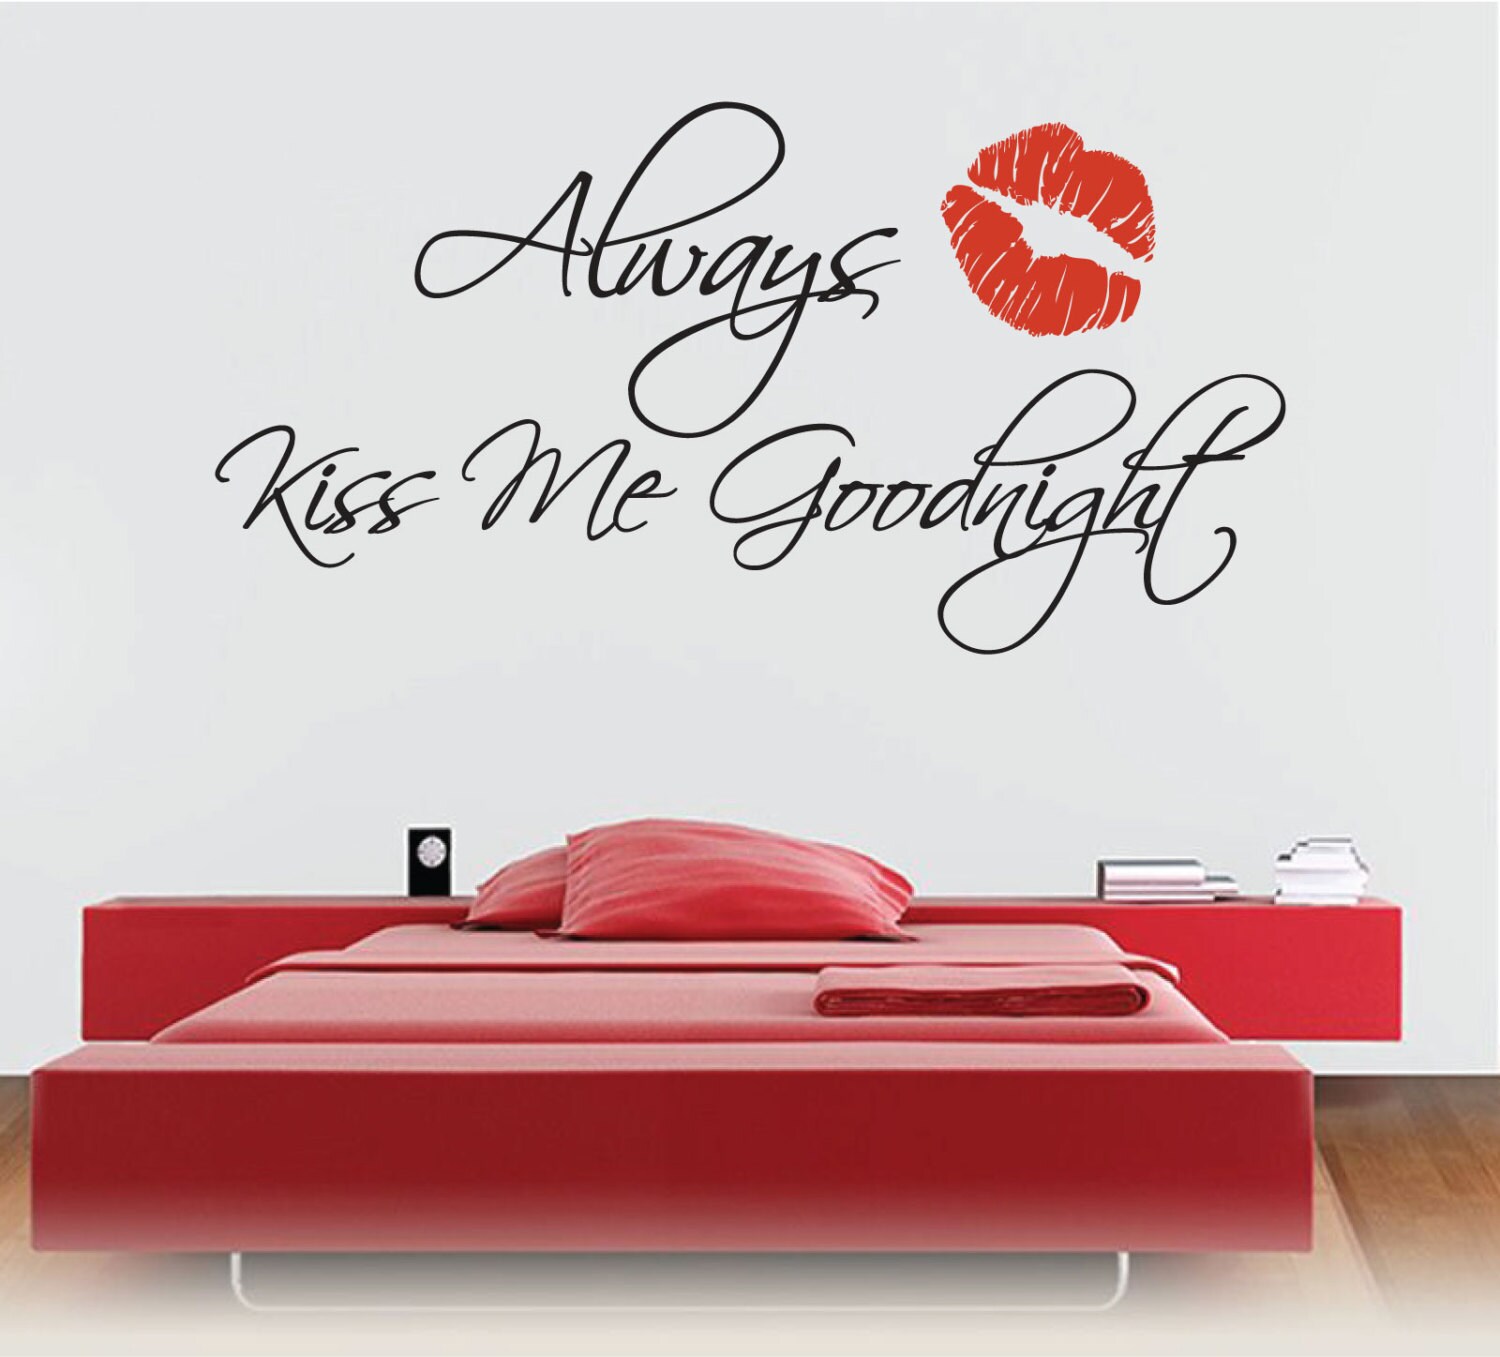 Always Kiss Me Goodnight Bedroom Wall Decal Vinyl Sticker Wall 7700